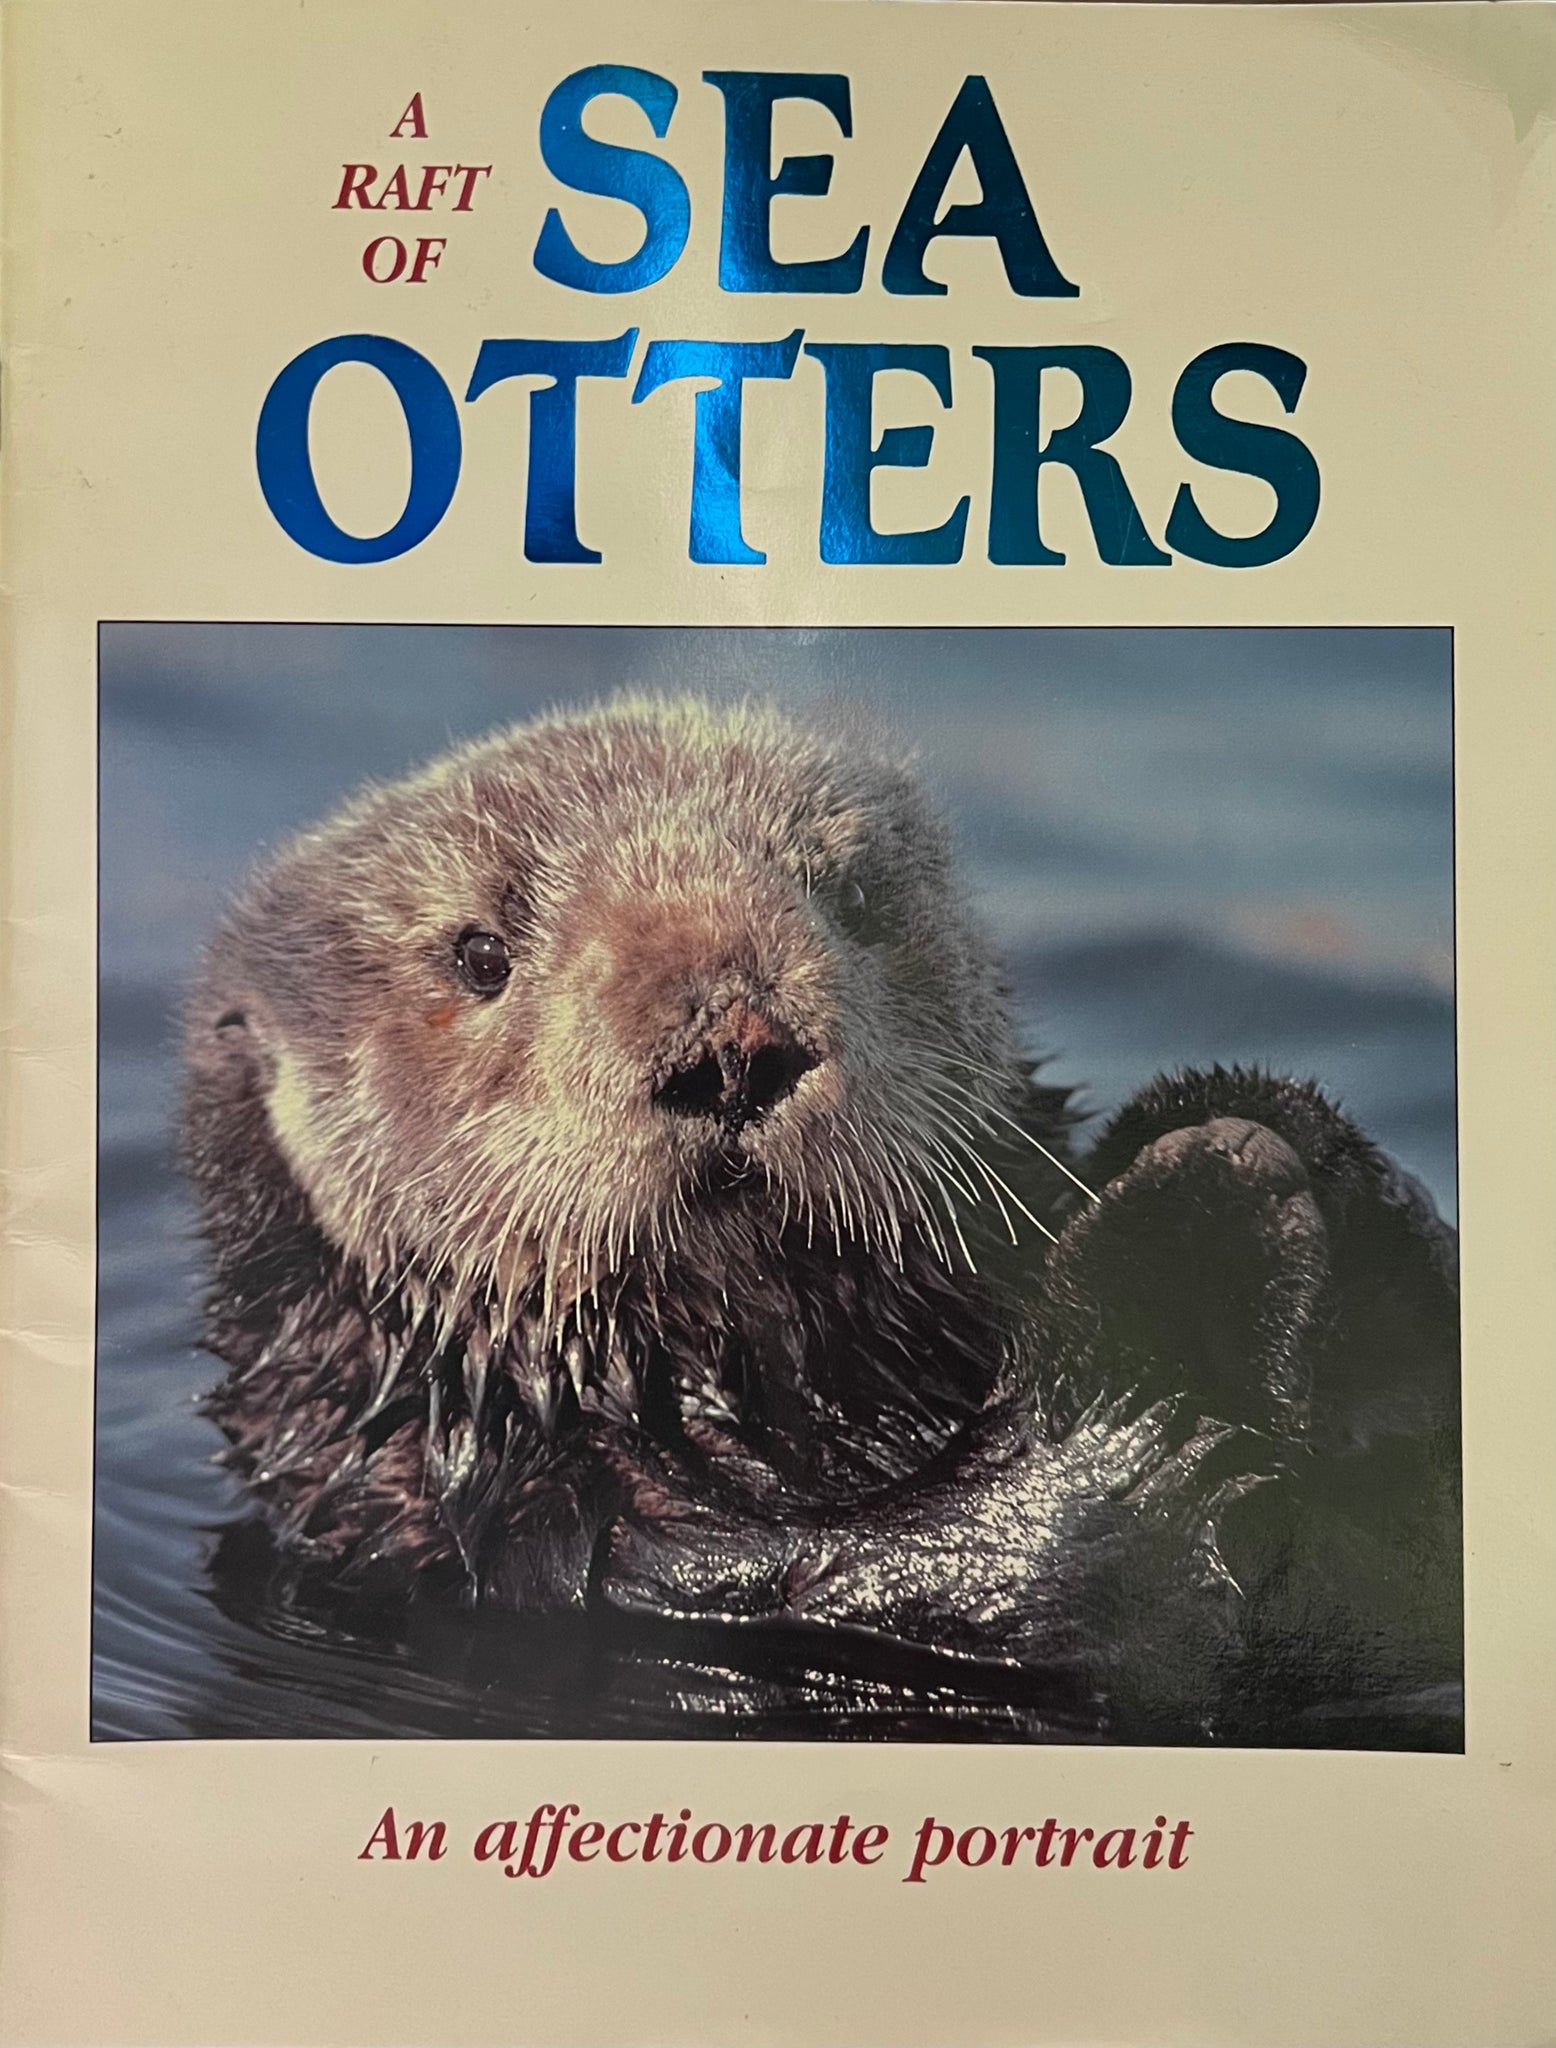 A Raft of Sea Otters, An Affectionate Portrait, Vicki Leon